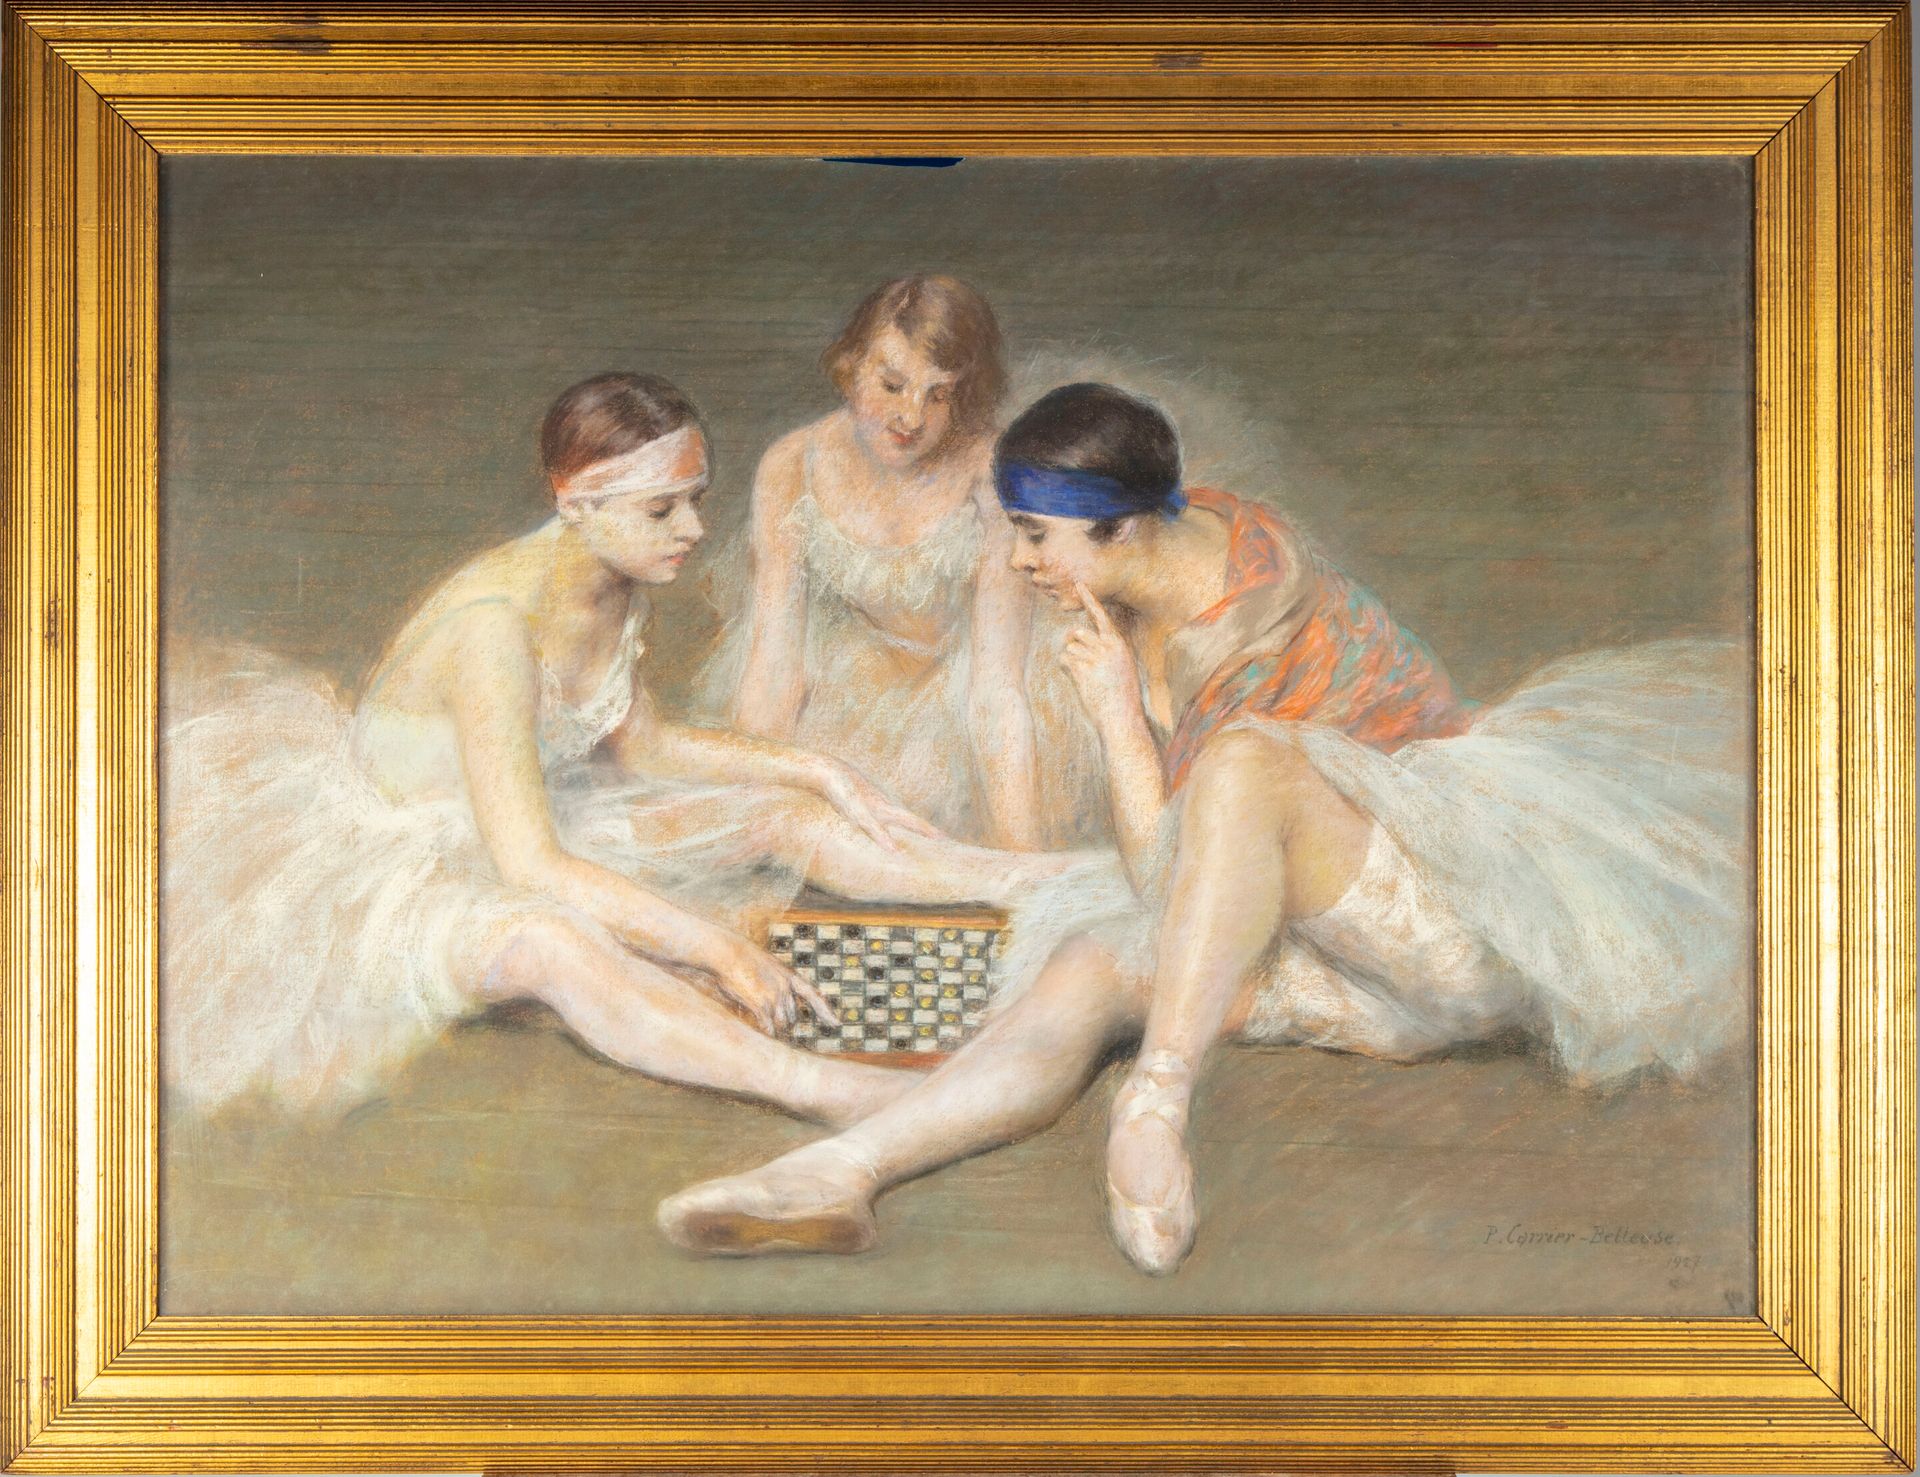 CARRIER-BELLEUSE 皮埃尔-卡里尔-贝卢斯 (1851-1932)

玩跳棋的舞者

粉彩画，右下角有签名

85 x 118厘米

镀金木框